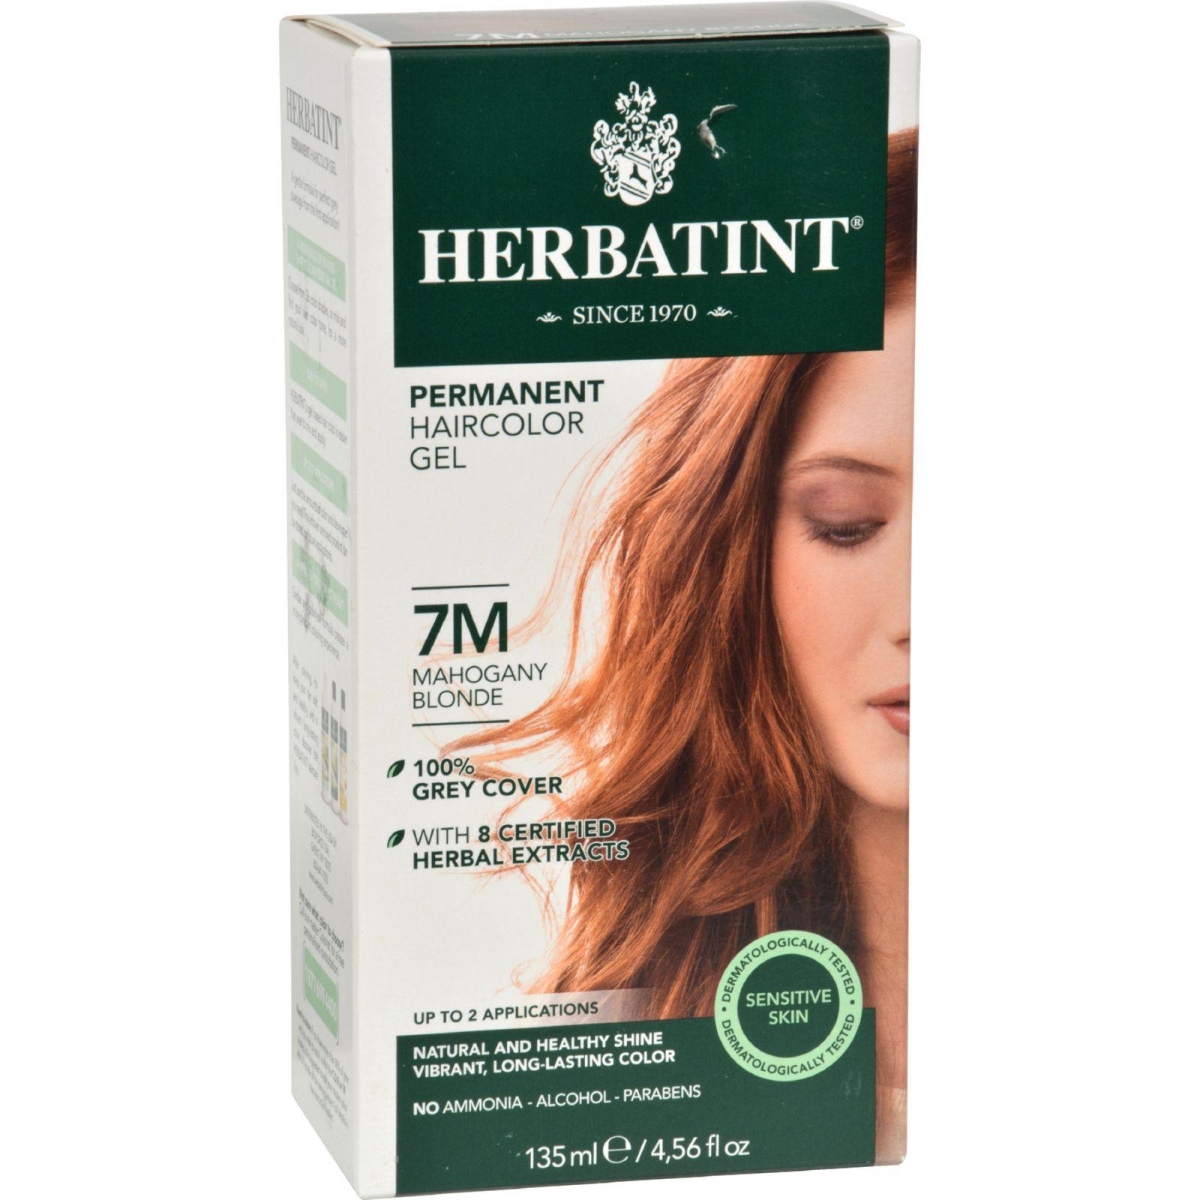 Hg0226878 135 Ml Permanent Herbal Haircolor Gel, 7m Mahogany Blonde